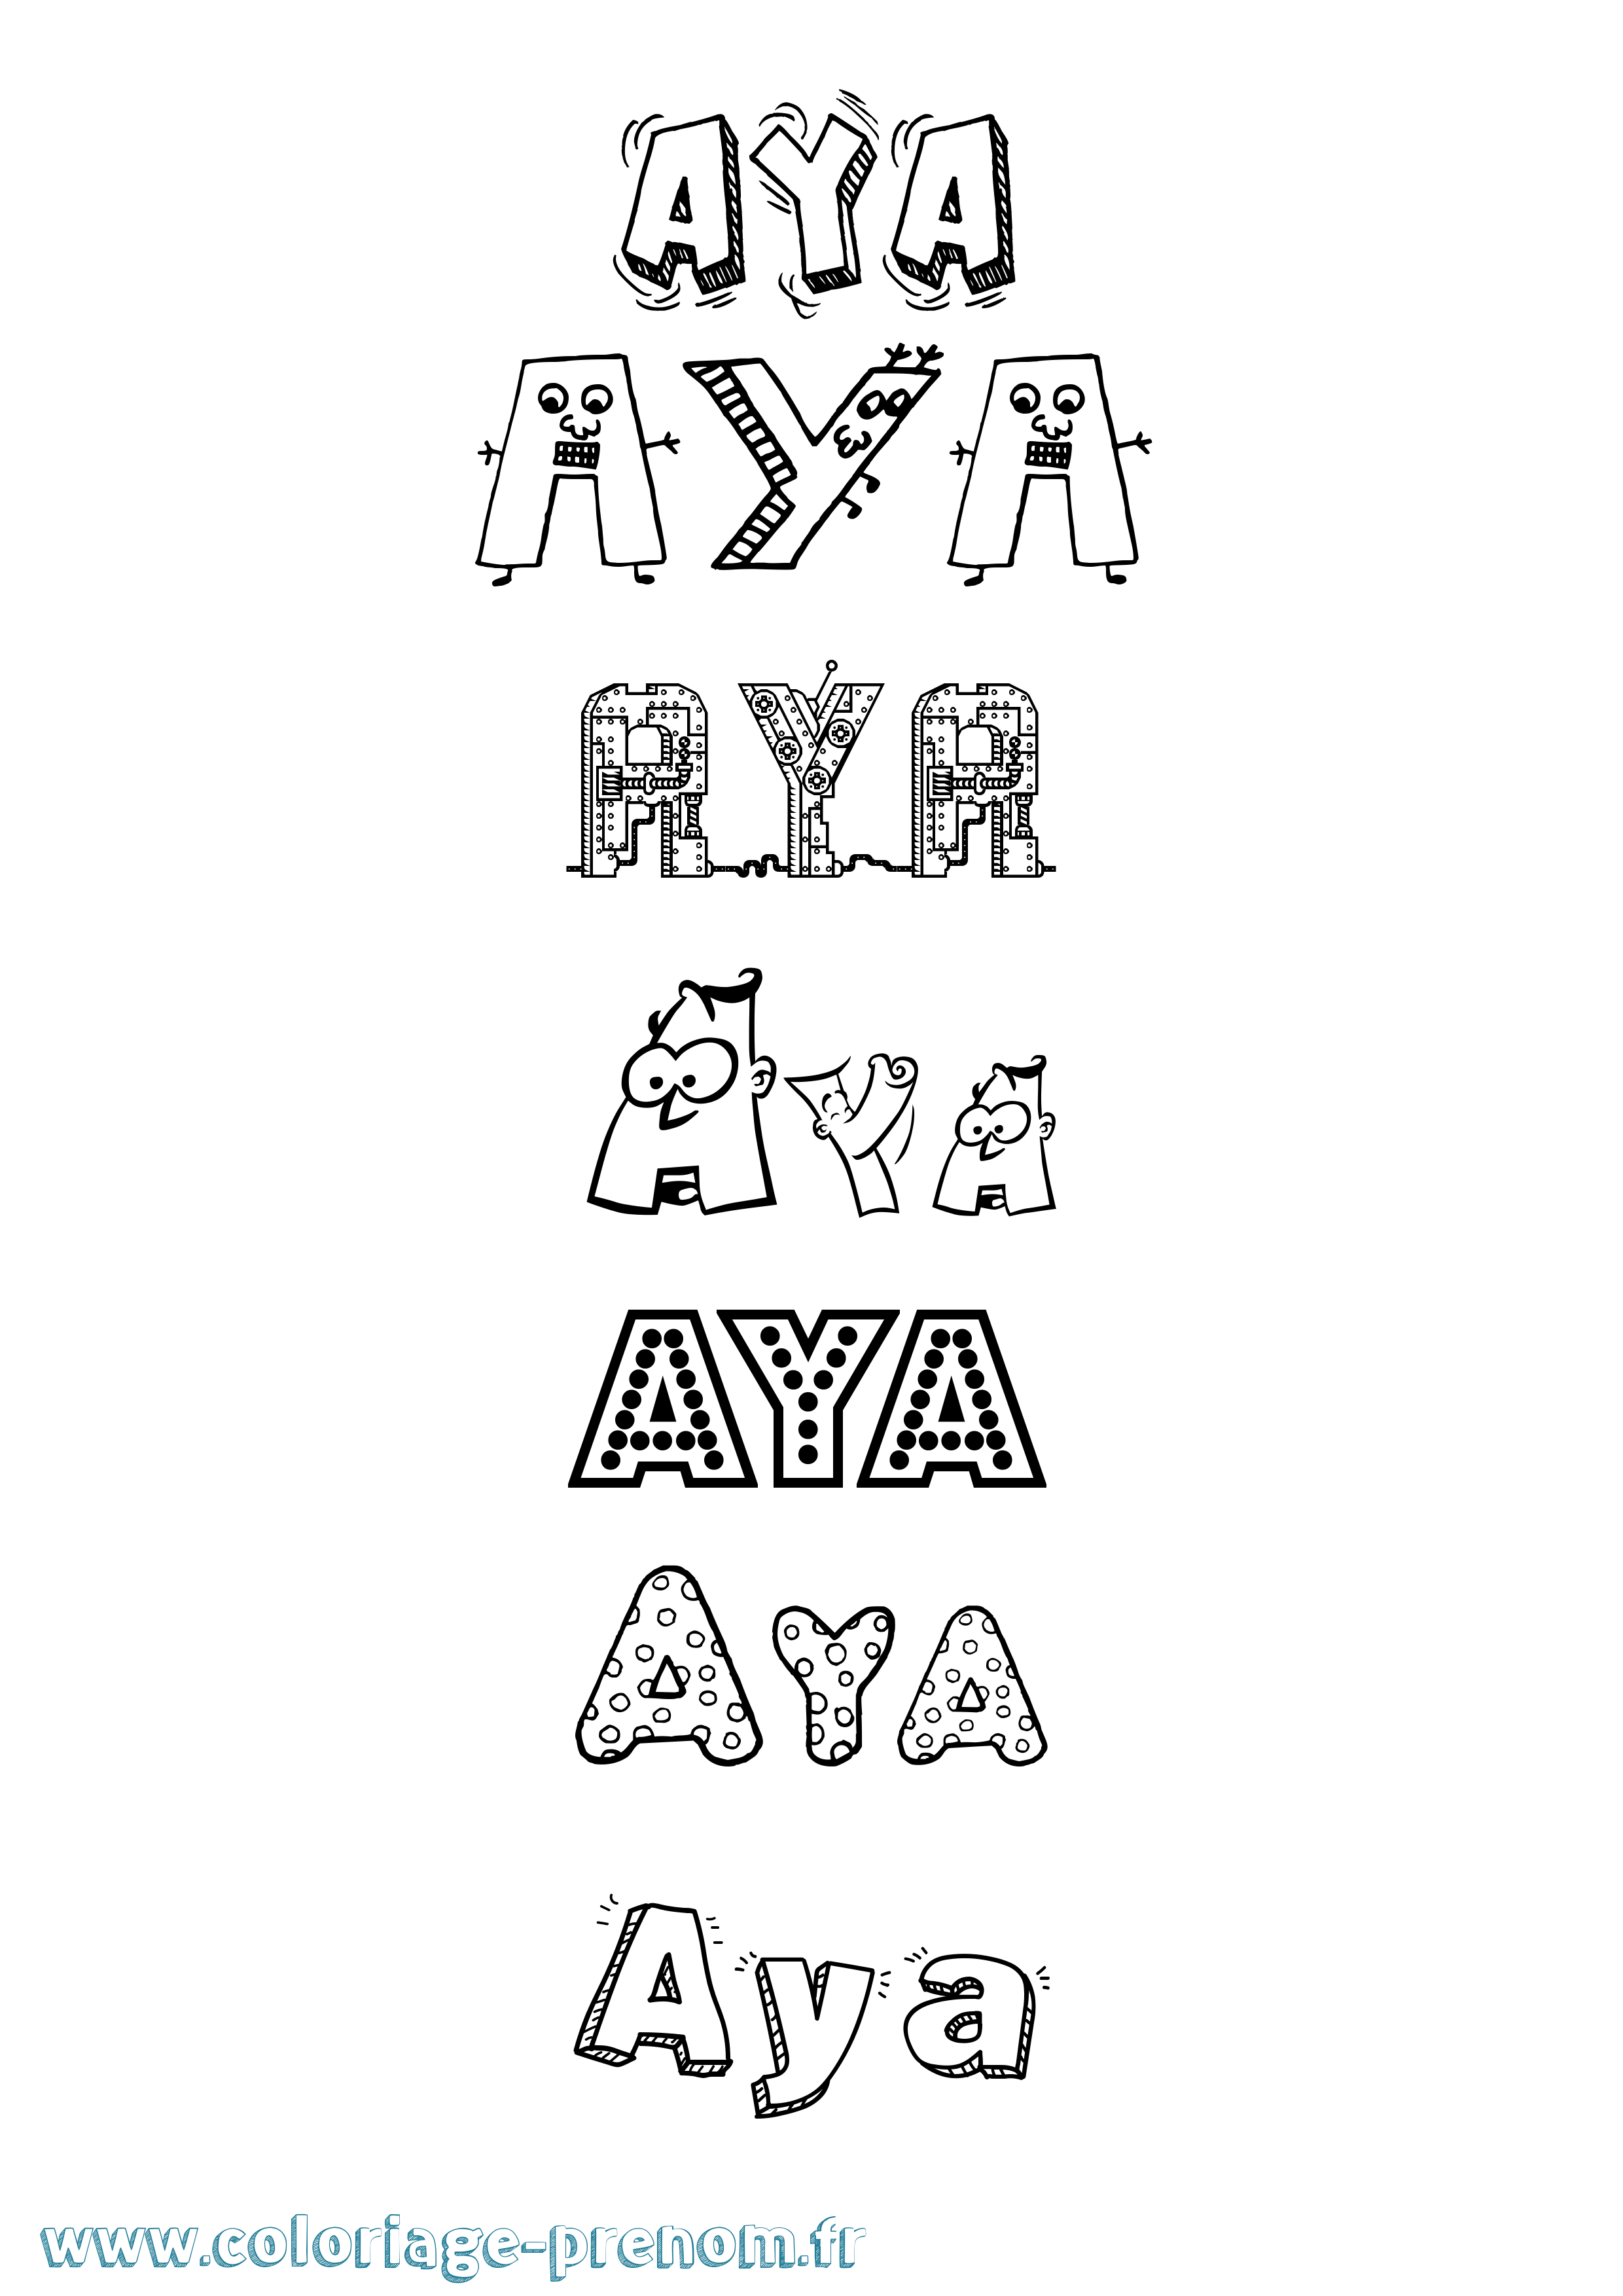 Coloriage prénom Aya Fun